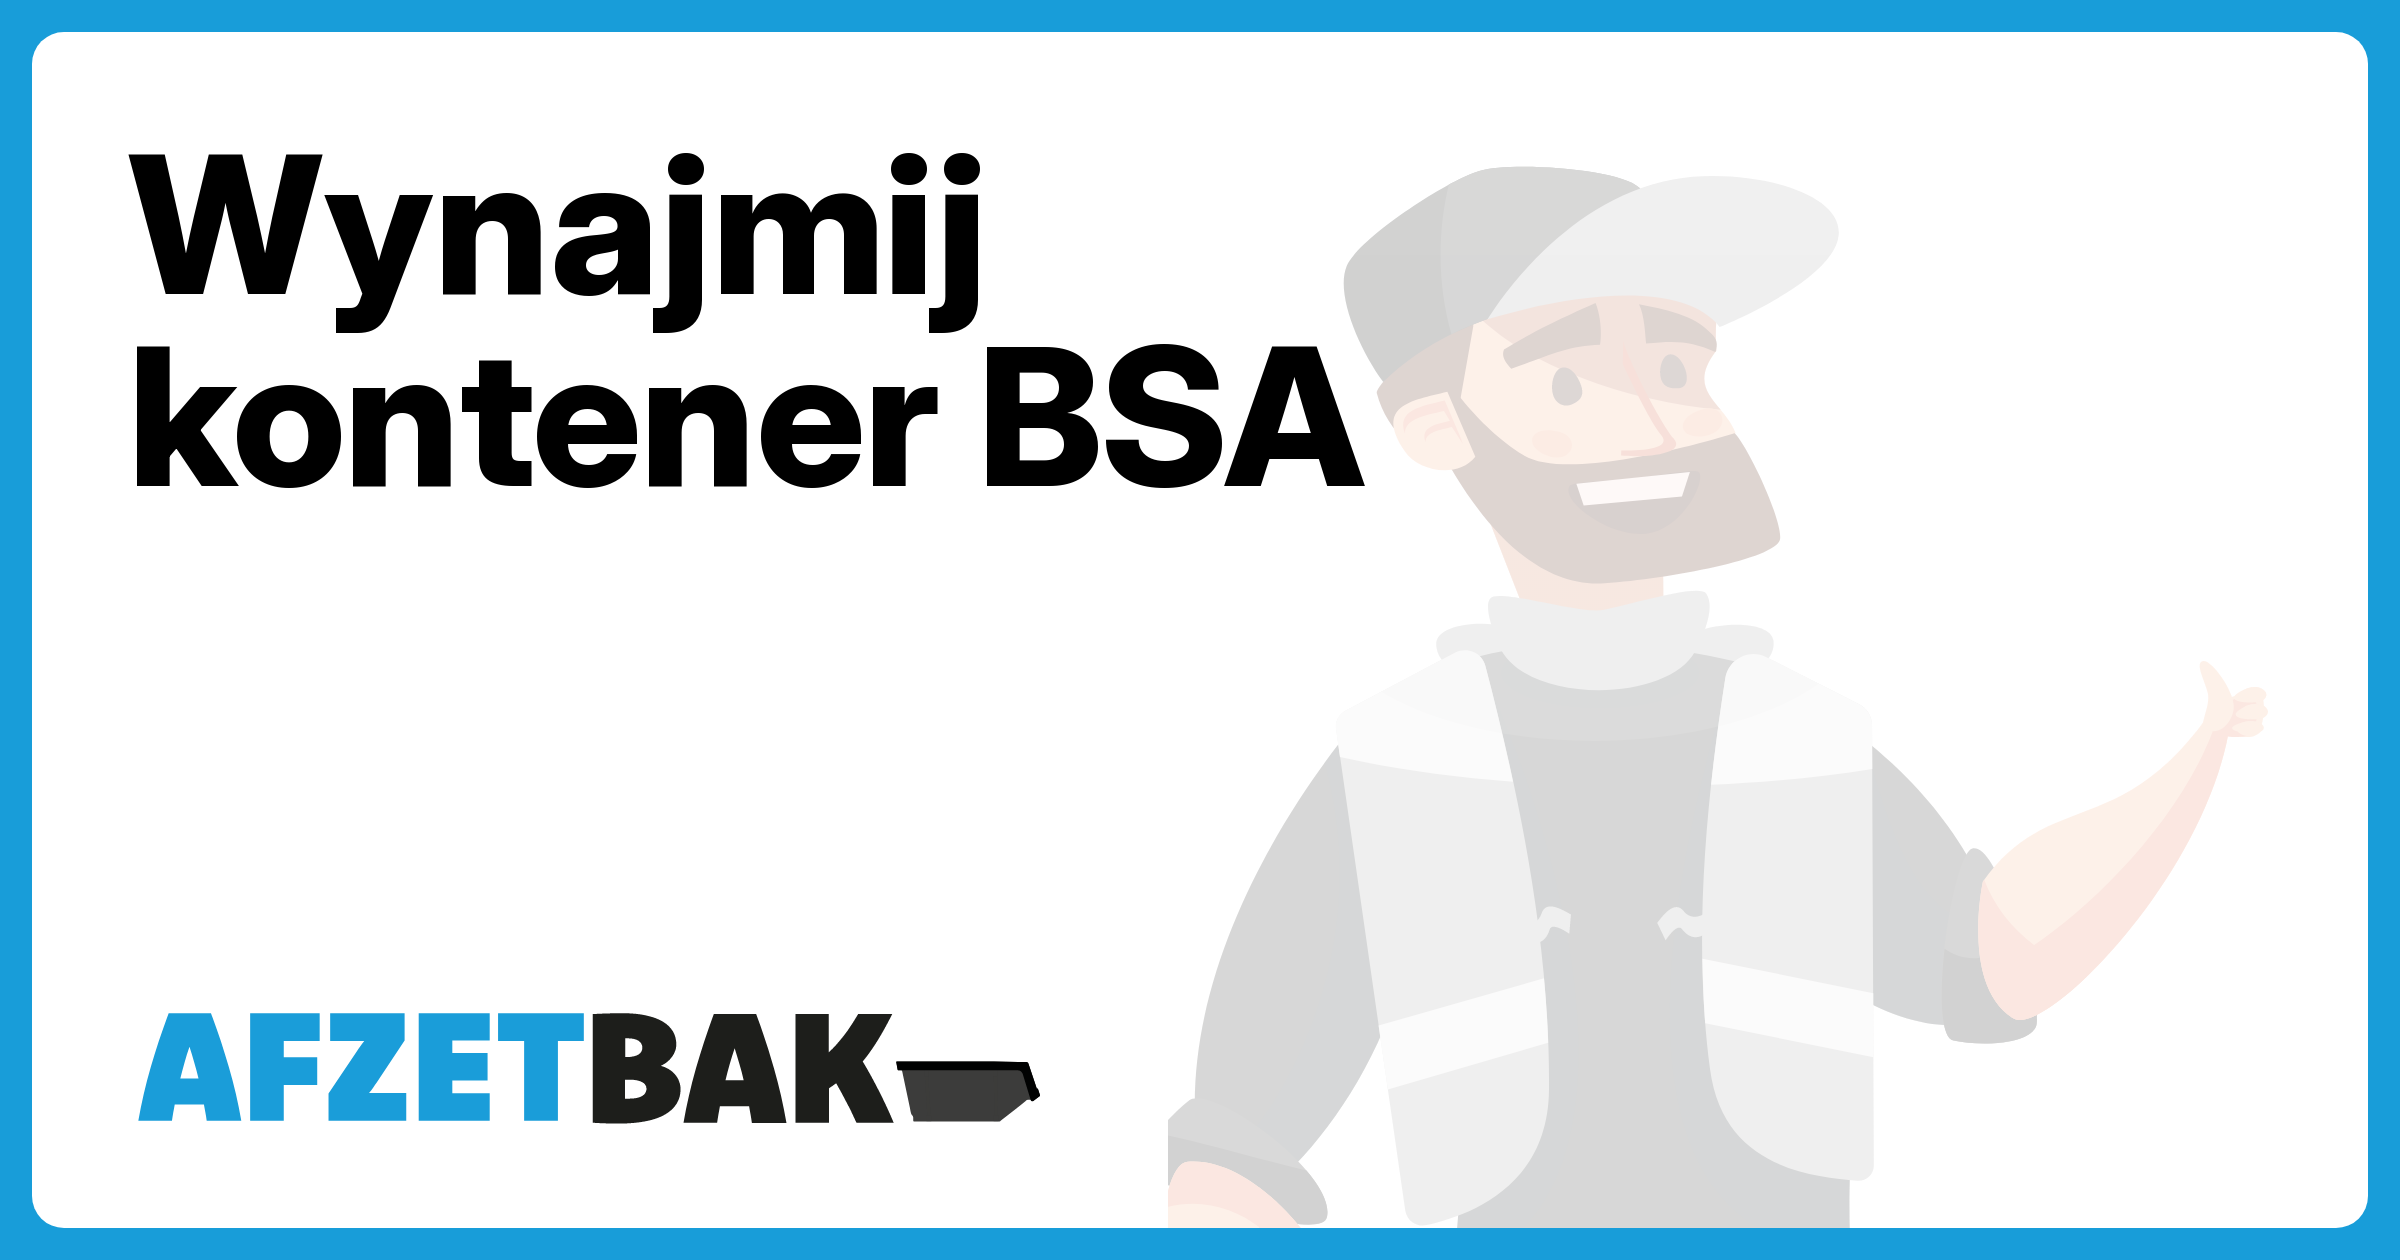 Wynajmij kontener BSA - Afzetbak.nl